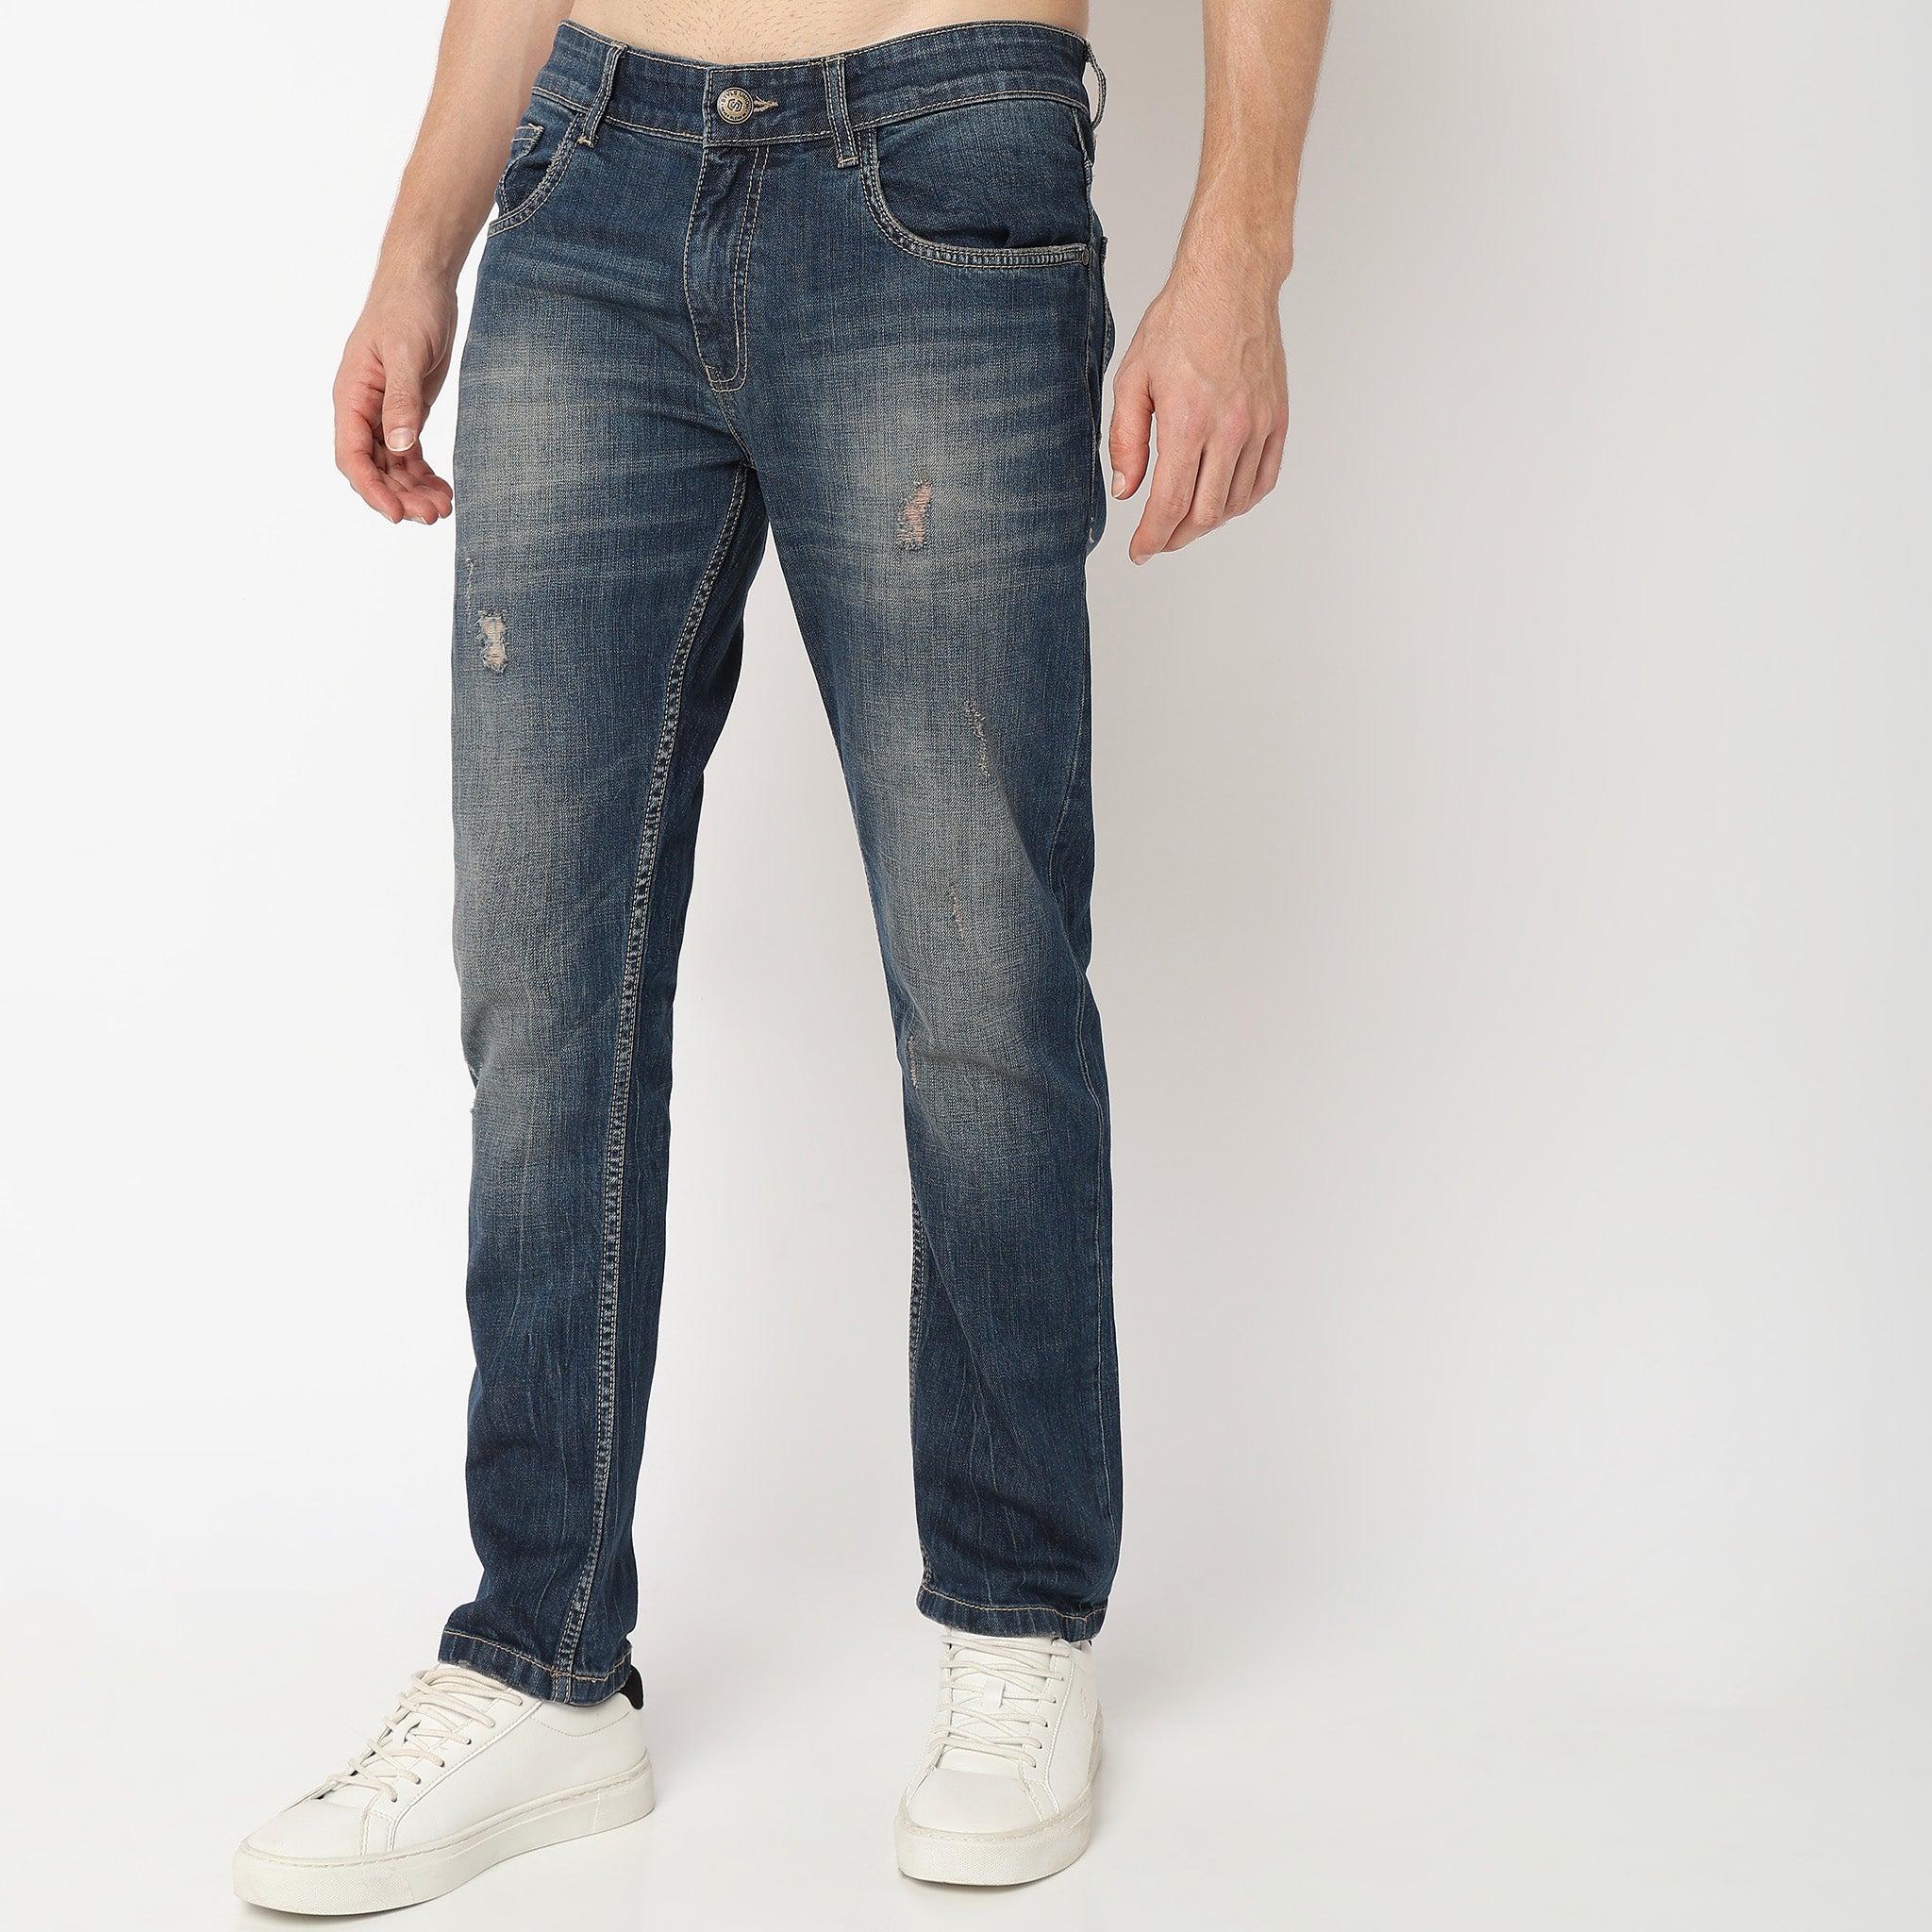 Men Wearing Slim Fit Embellished Low Rise Jean